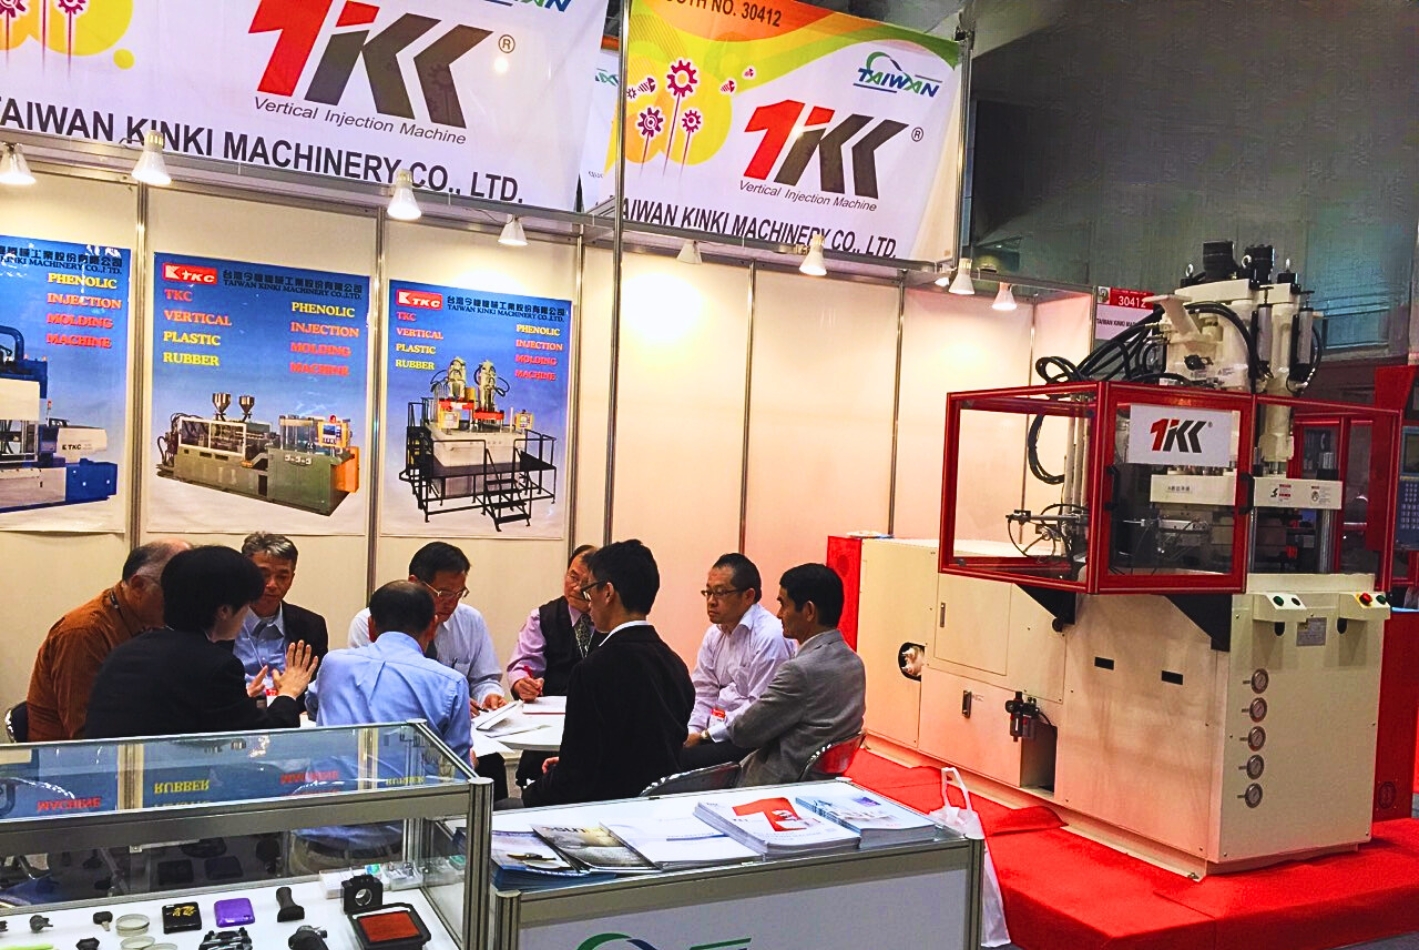 Taiwan Kinki : A Pioneer in Automotive Injection Molding